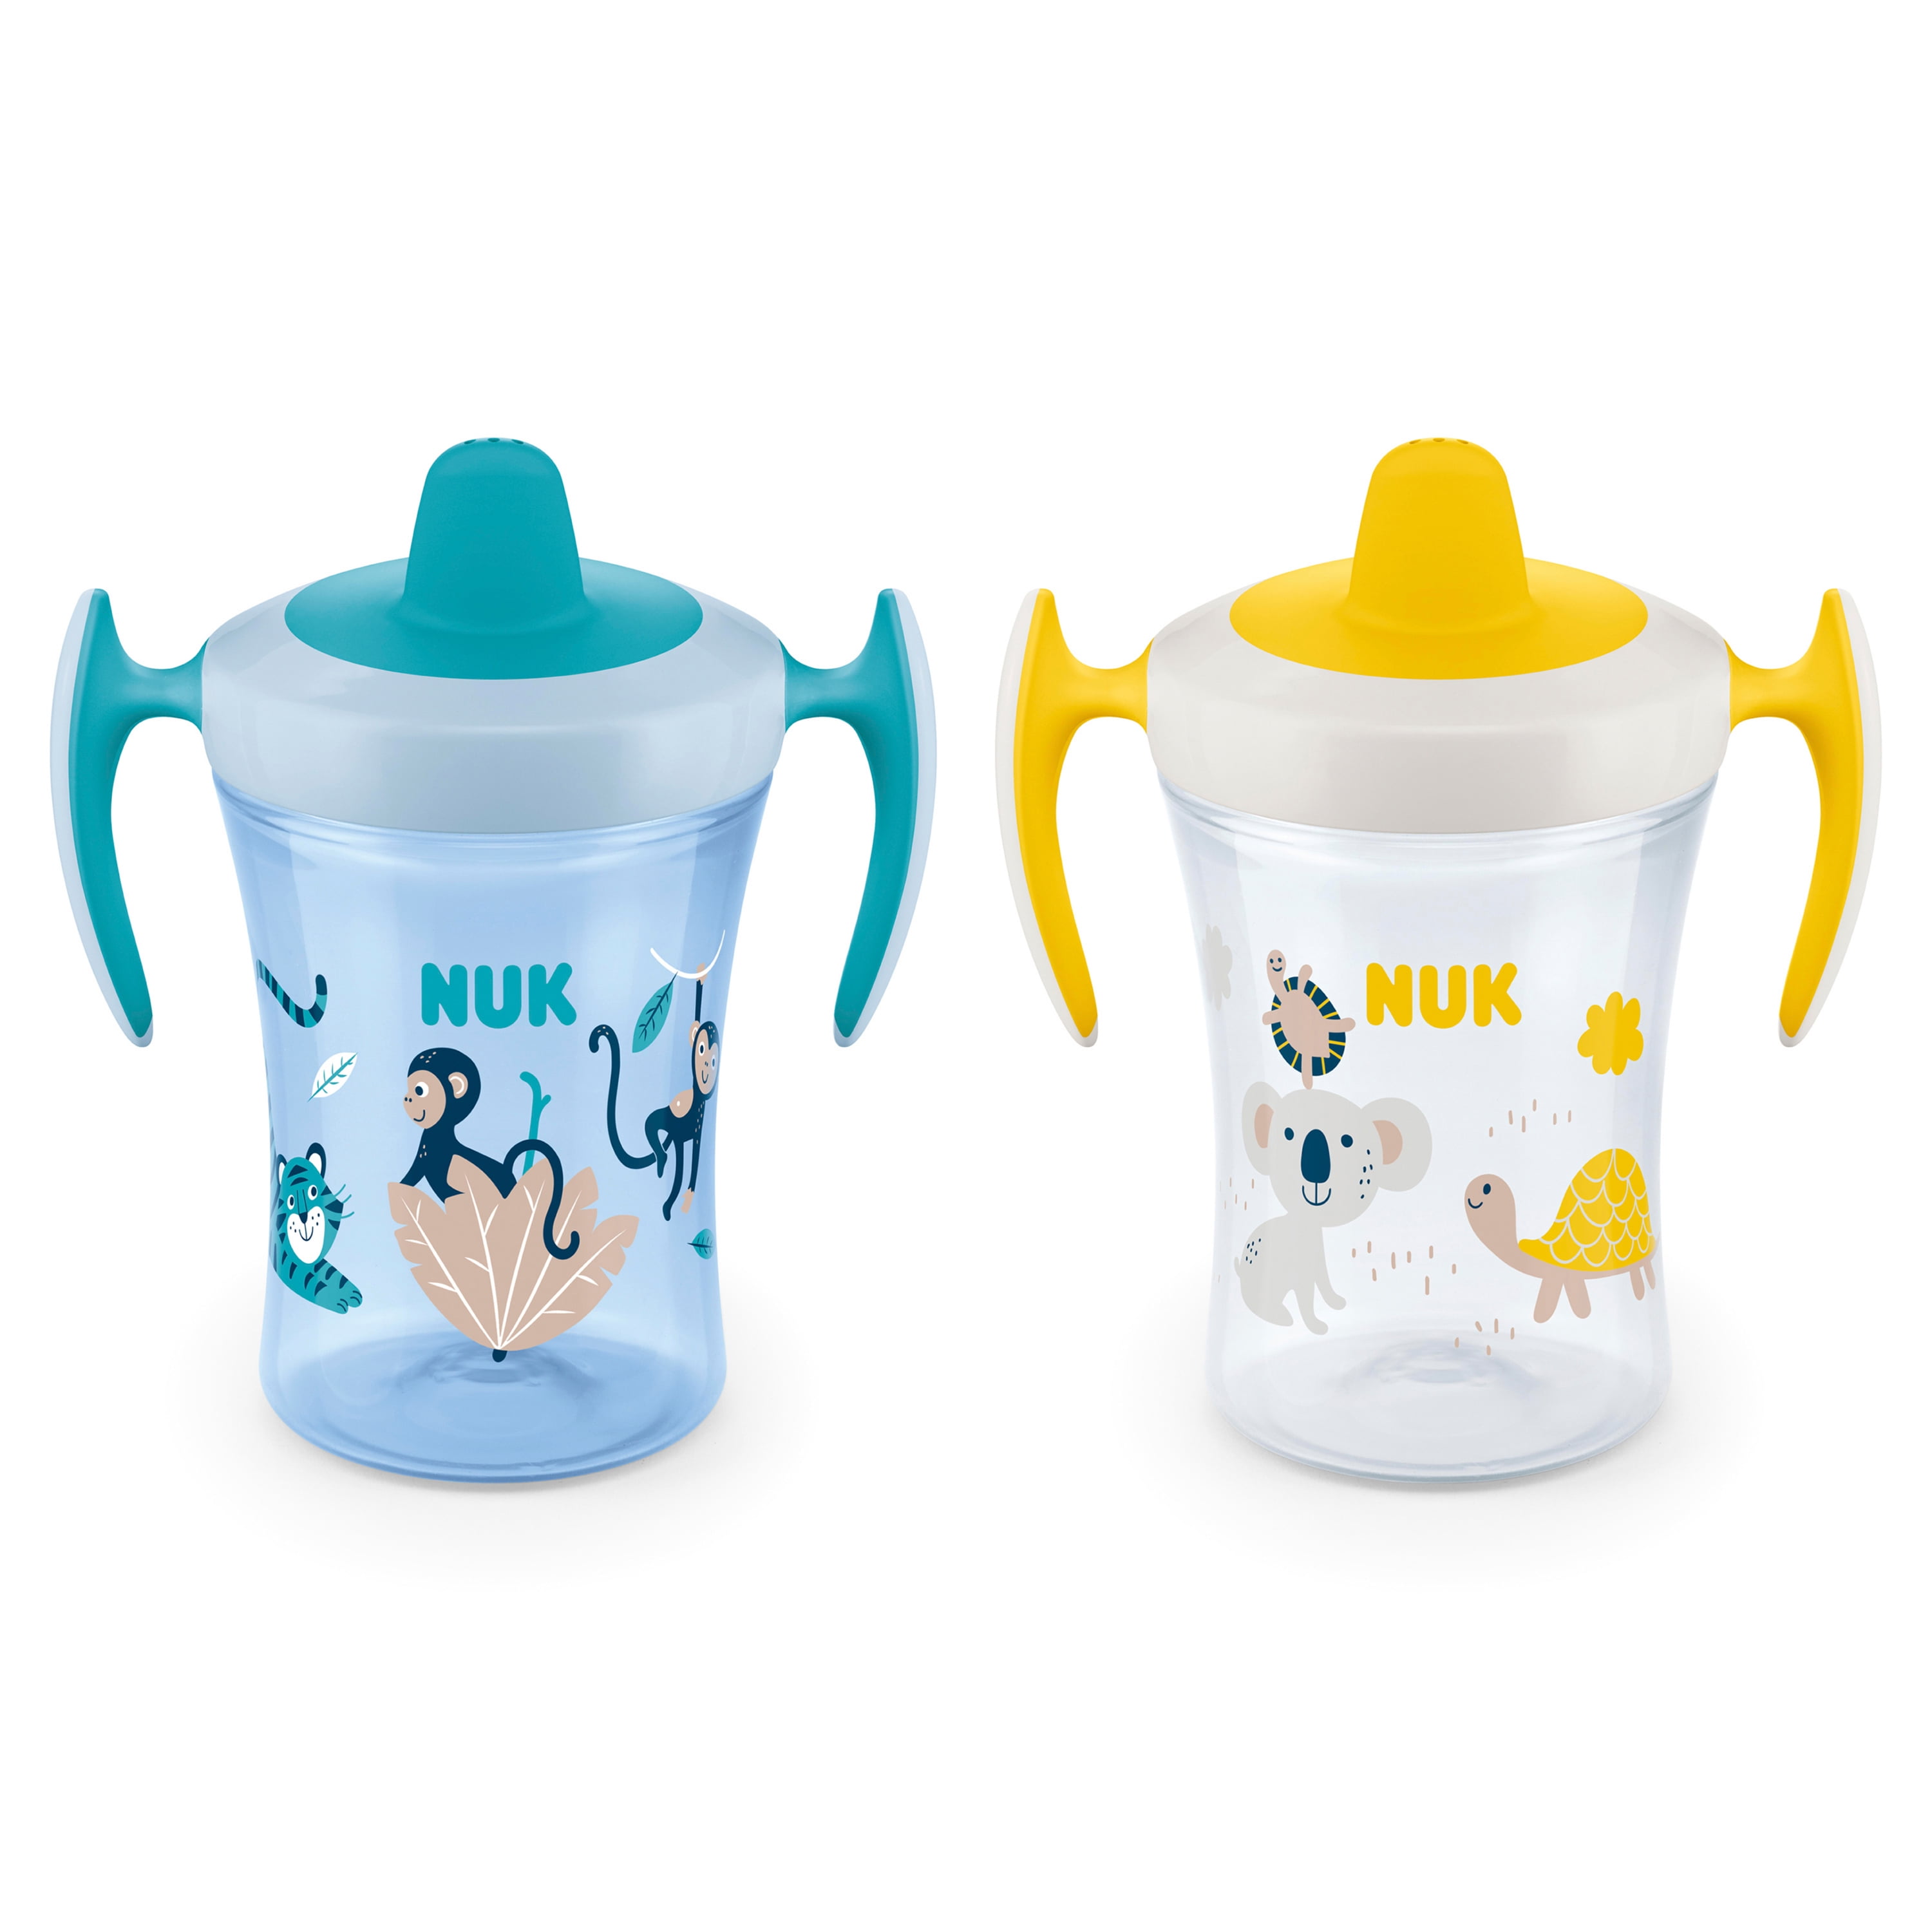 NUK Evolution Soft Spout Learner Cup, 8 oz., 2-Pack